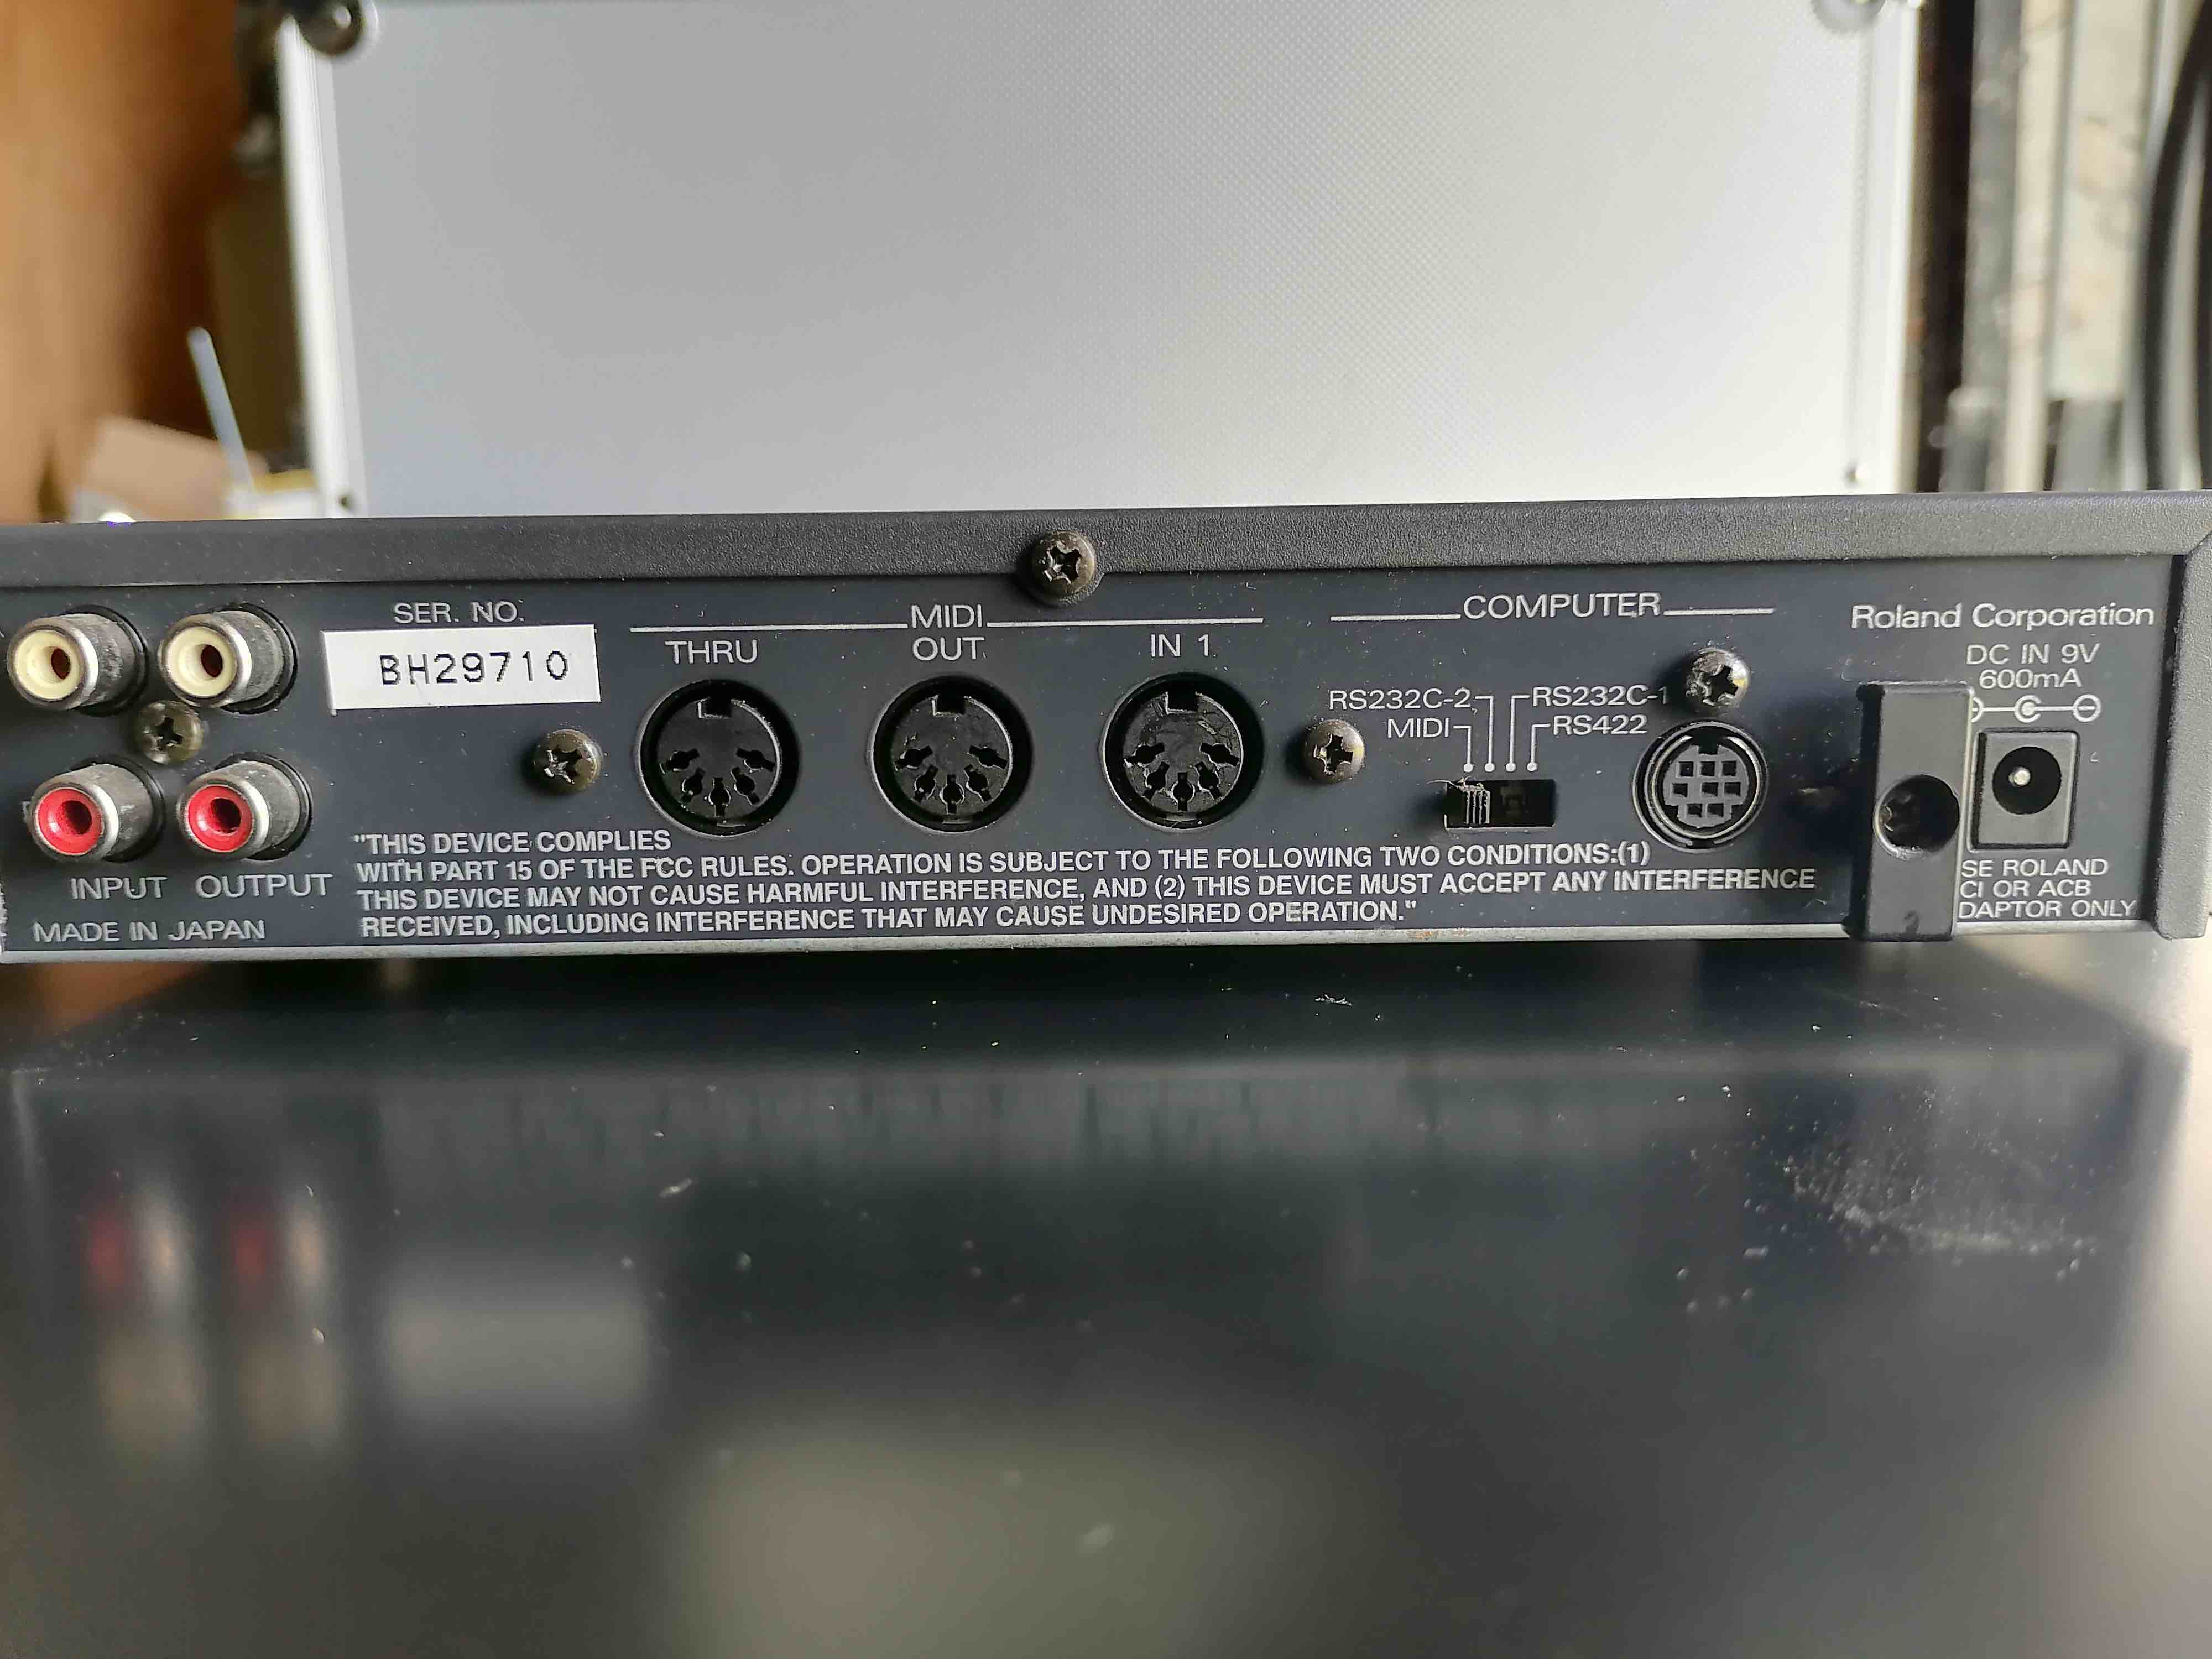 SC-55mkII - Roland SC-55mkII - Audiofanzine